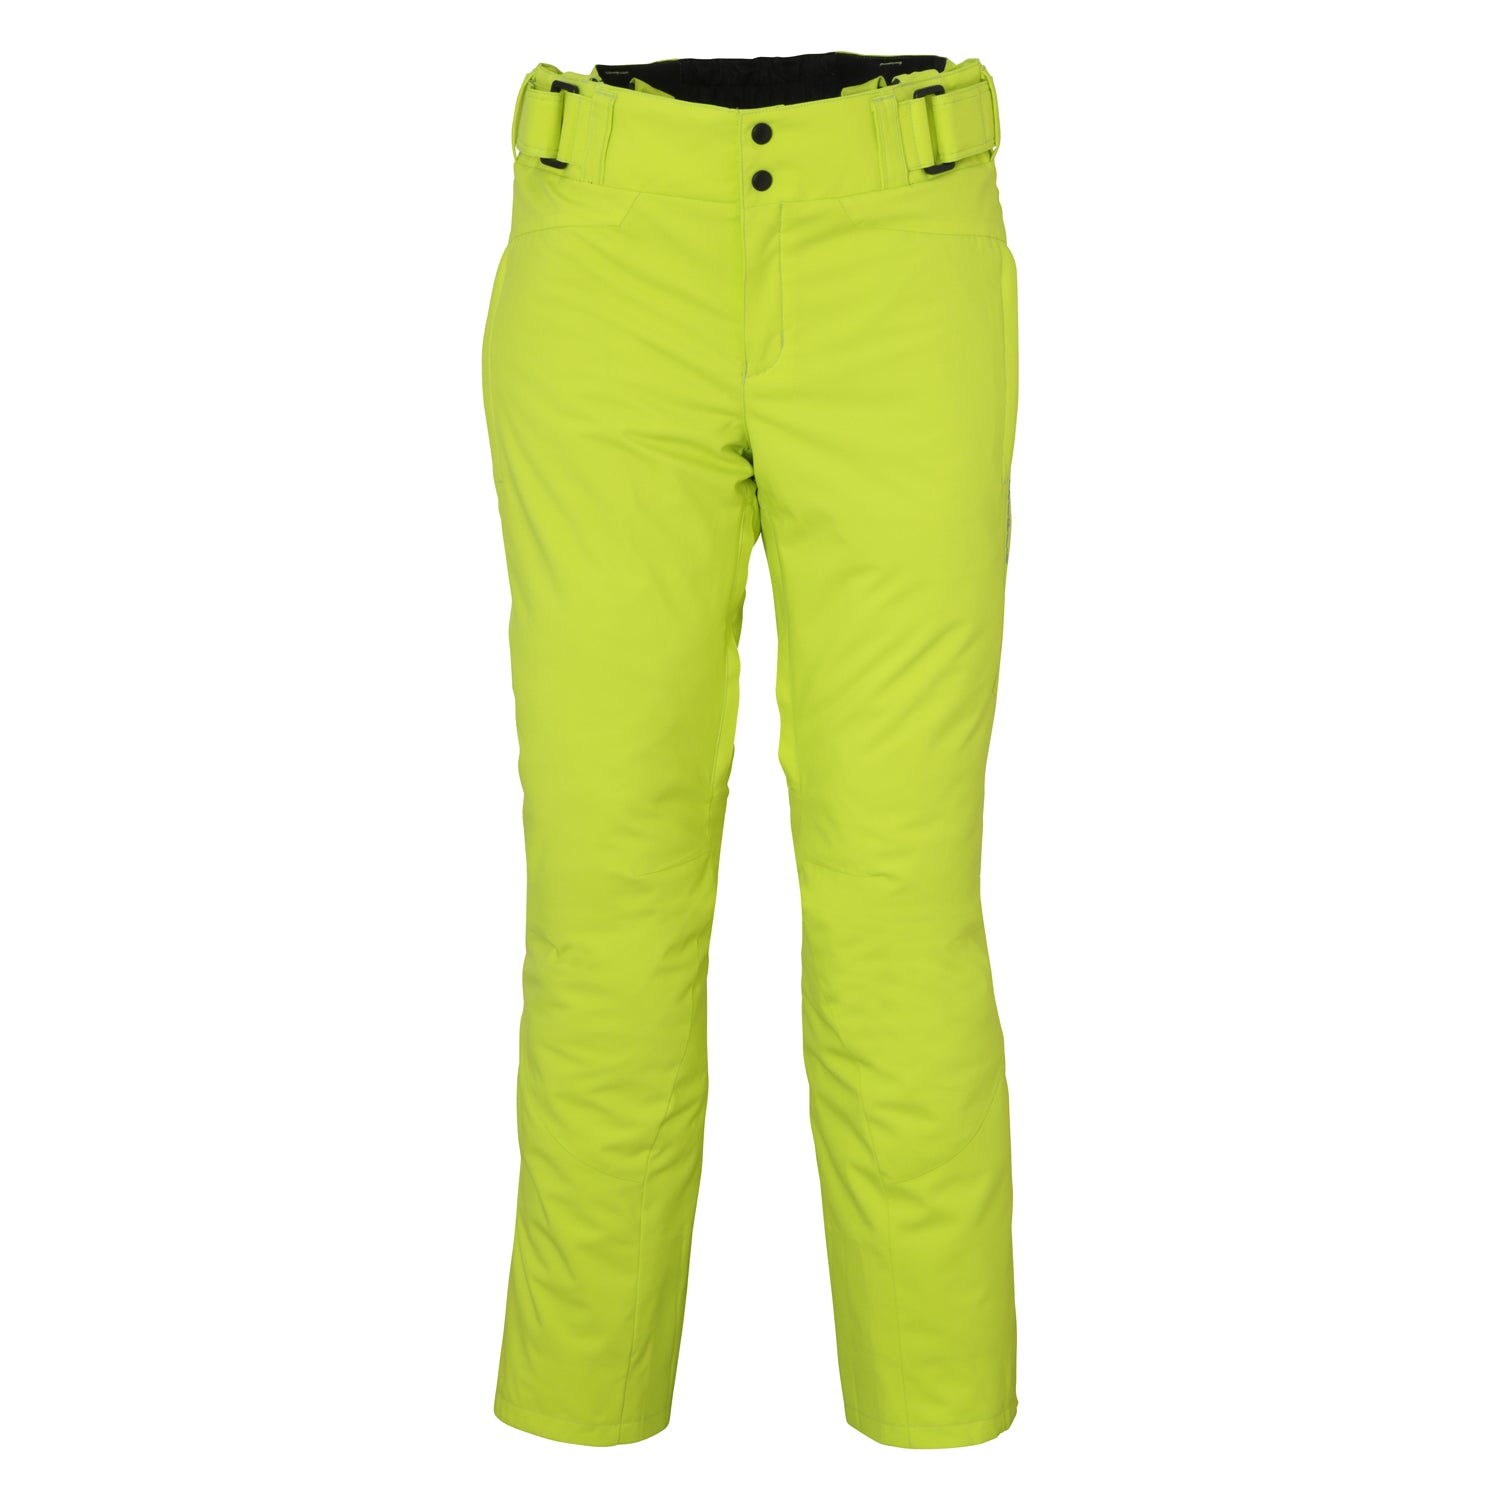 Phenix Arrow Ski Jacket 2020 Yellow Green